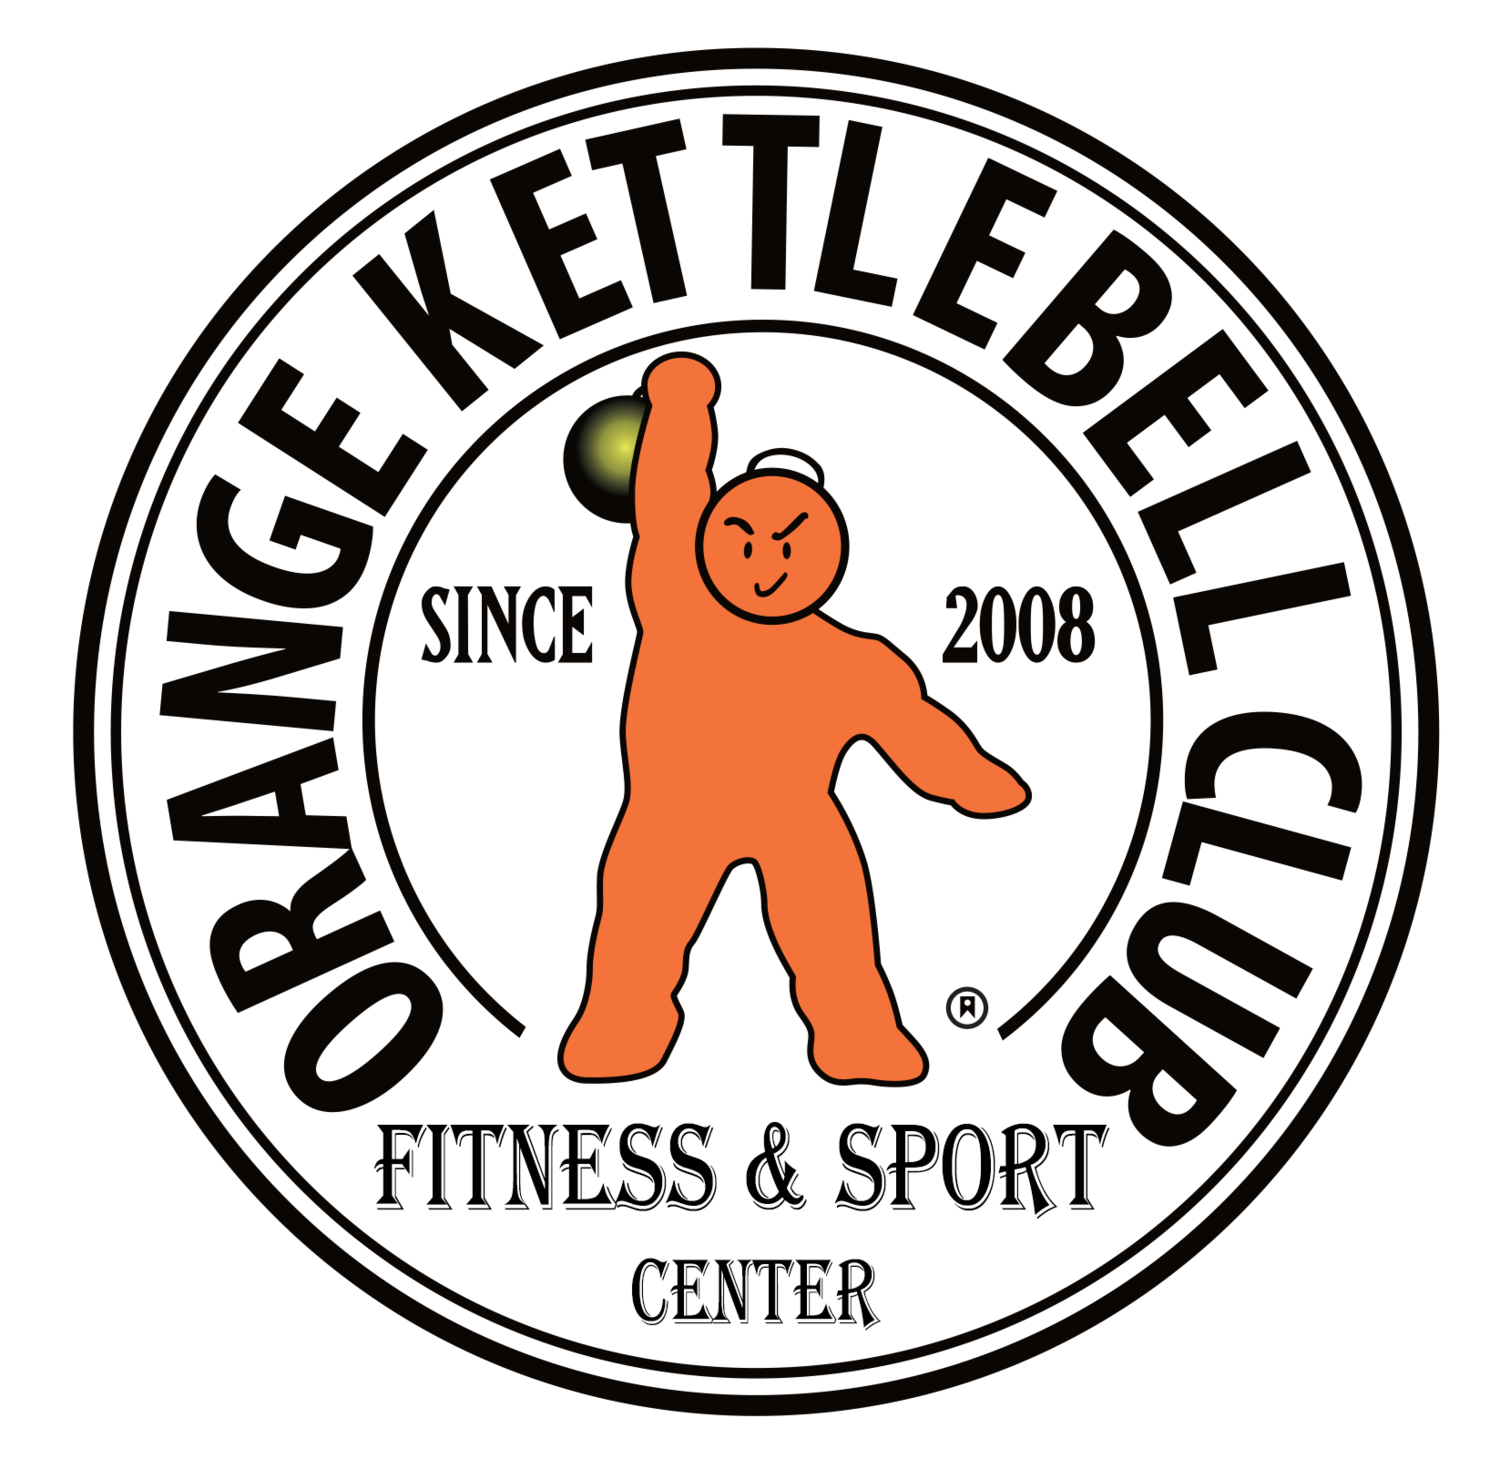 The Orange Kettlebell Club